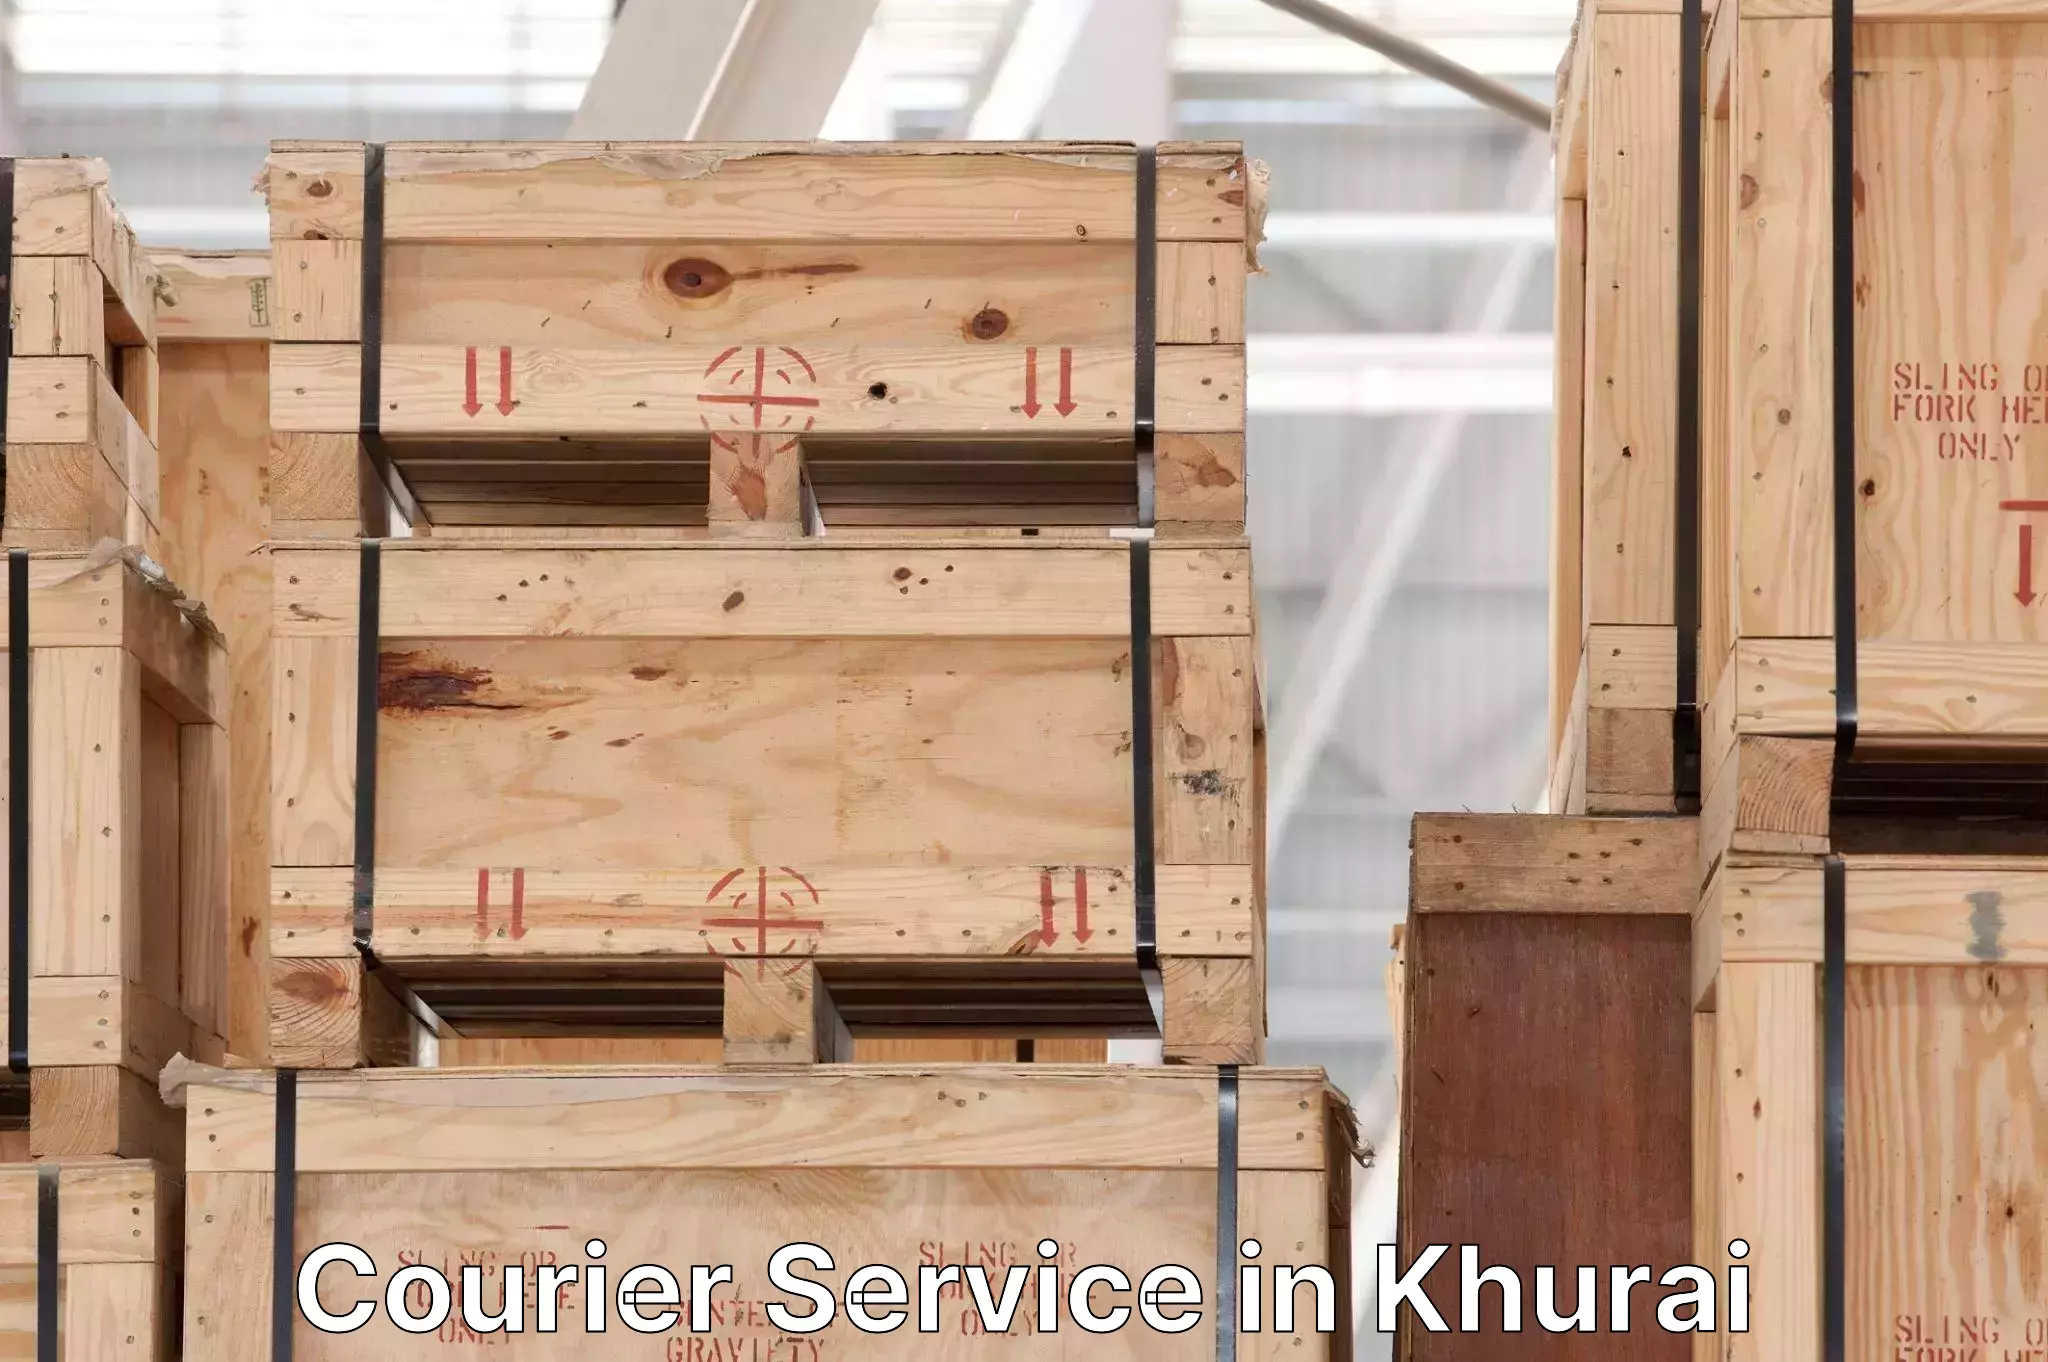 High-performance logistics in Khurai